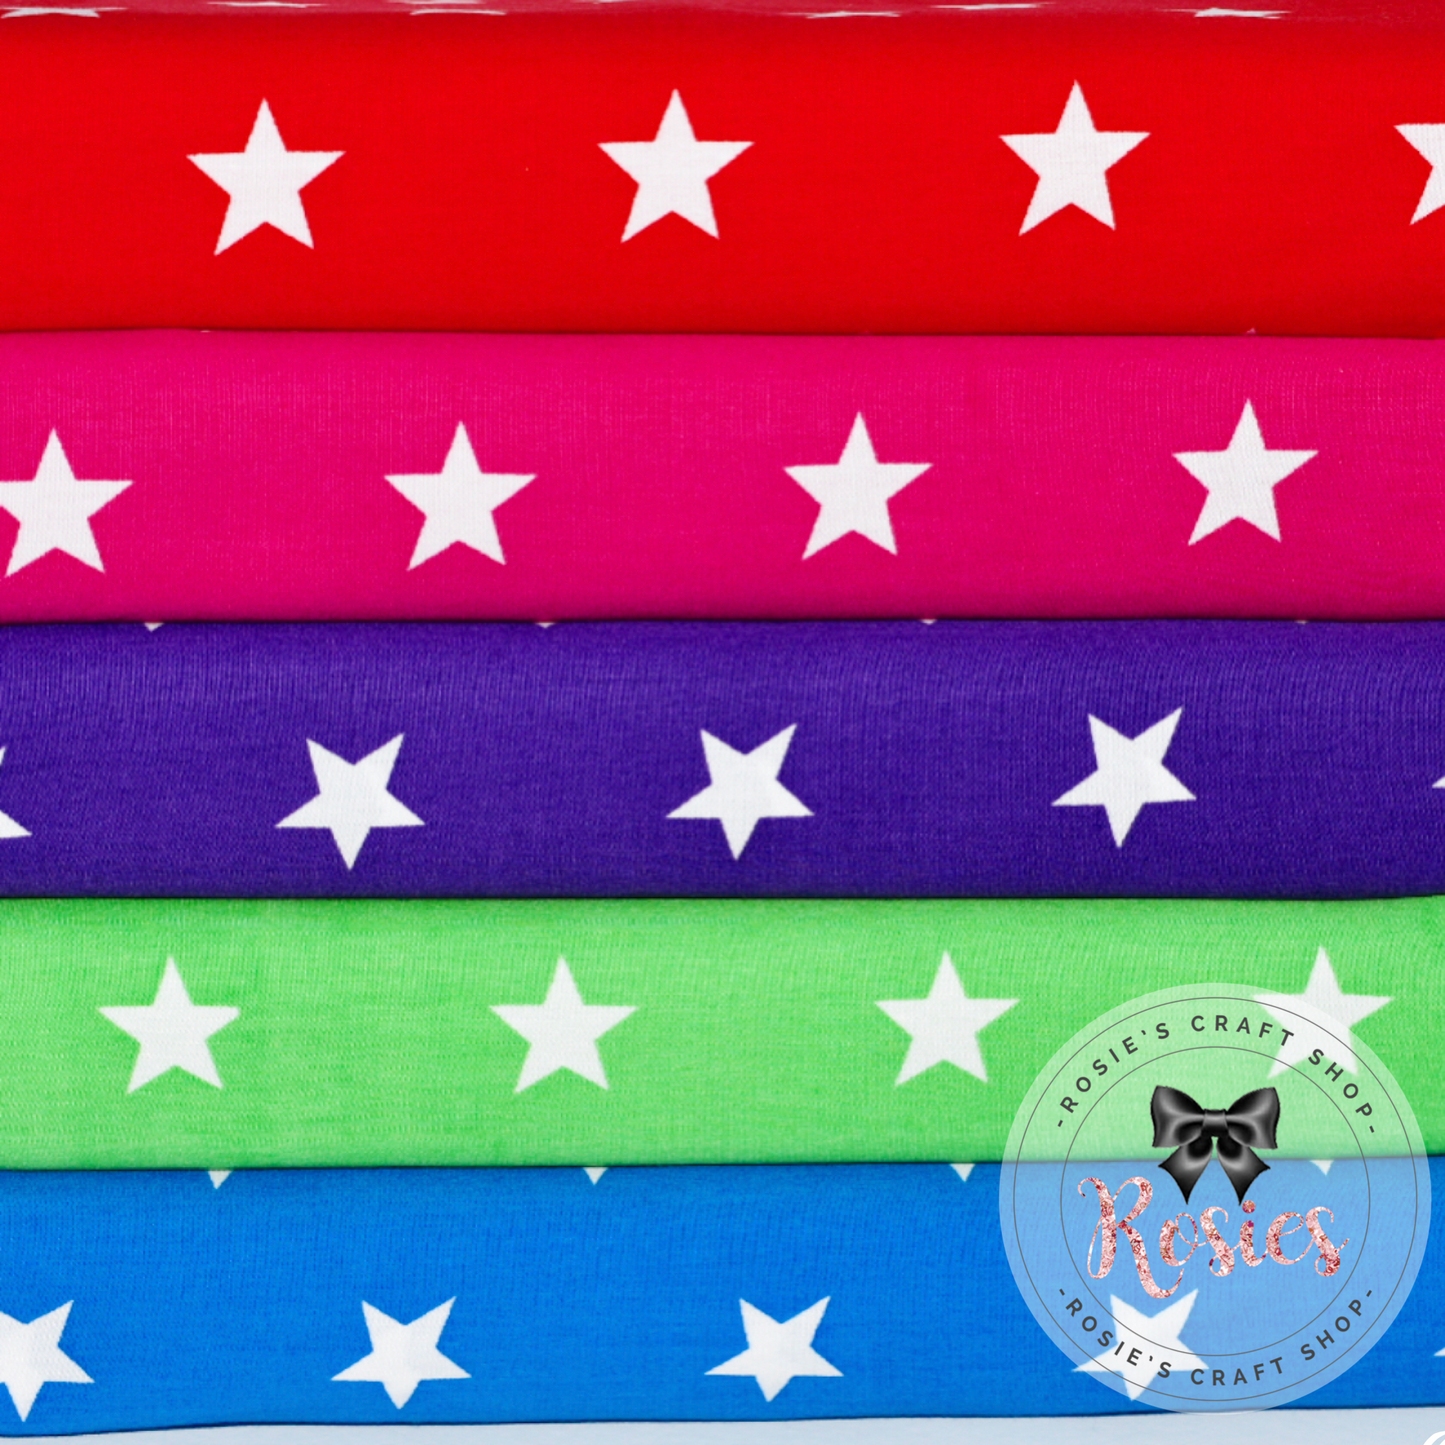 Chunky Stars 100% Cotton Poplin Fabric - Rosie's Craft Shop Ltd